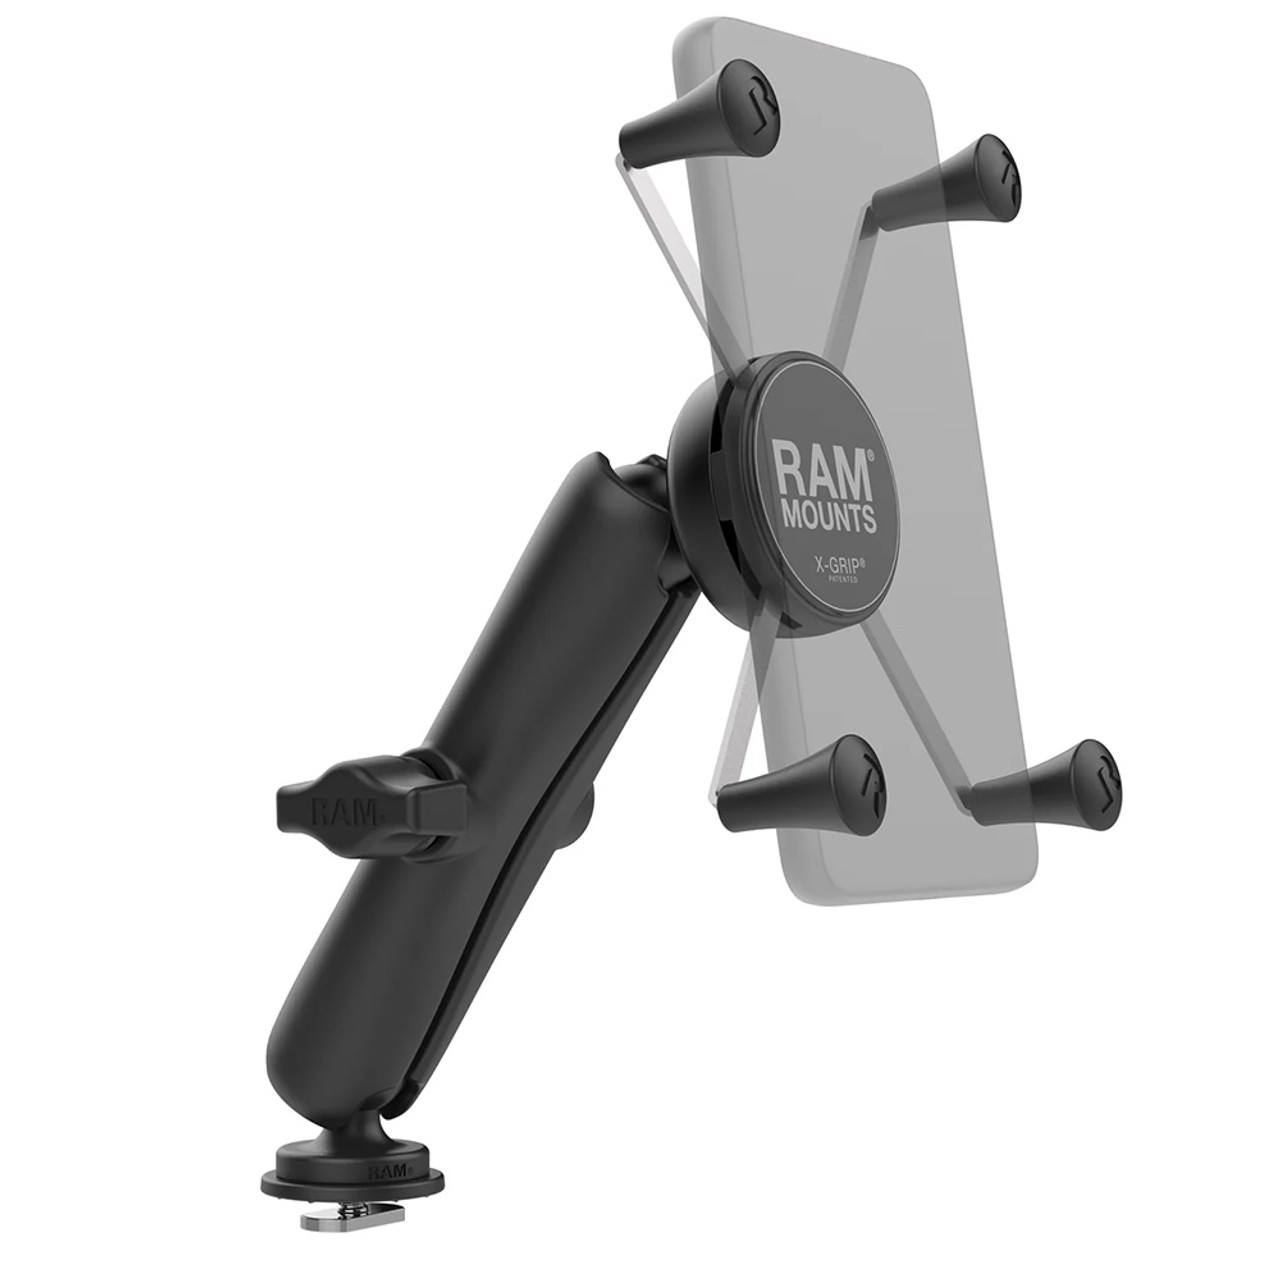 RAM Mount RAM X-Grip große Telefonhalterung mit RAM Tough-Strap-Lenkerbasis